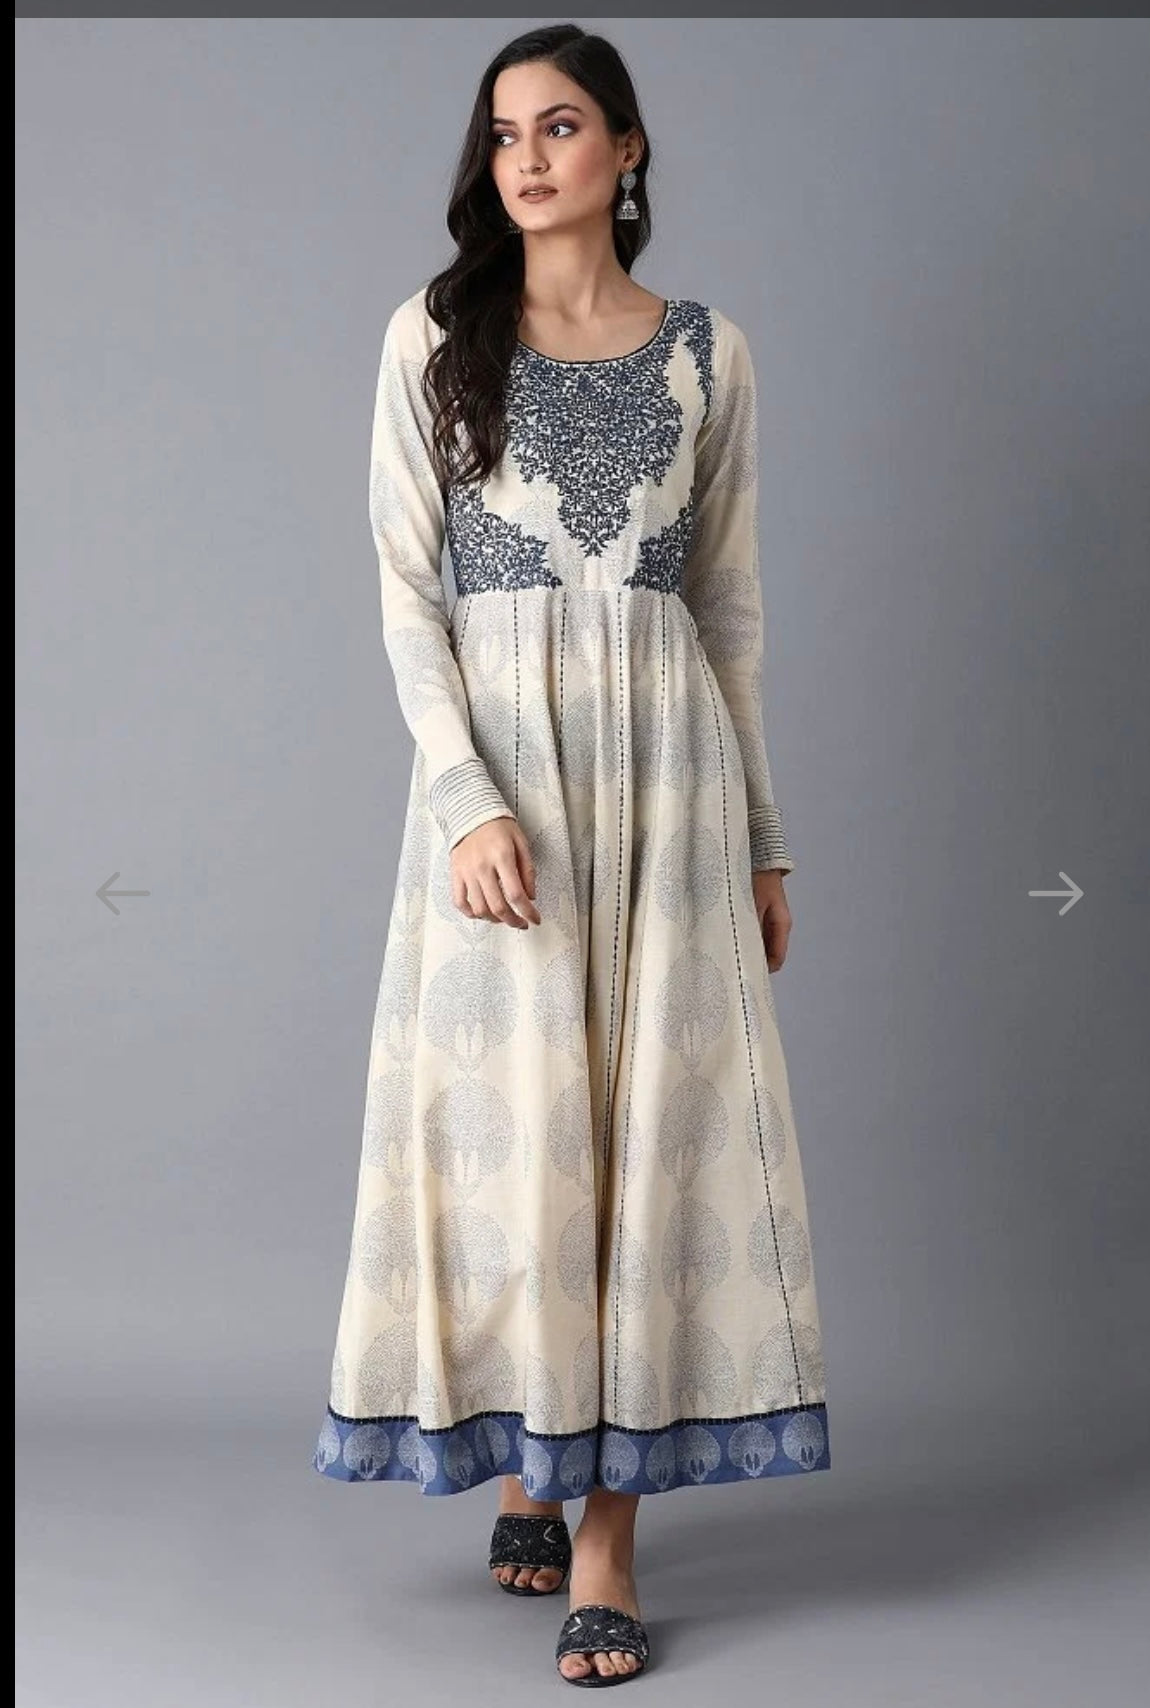 Elegant Ivory & Blue Cotton Gown - Size 36 (S)